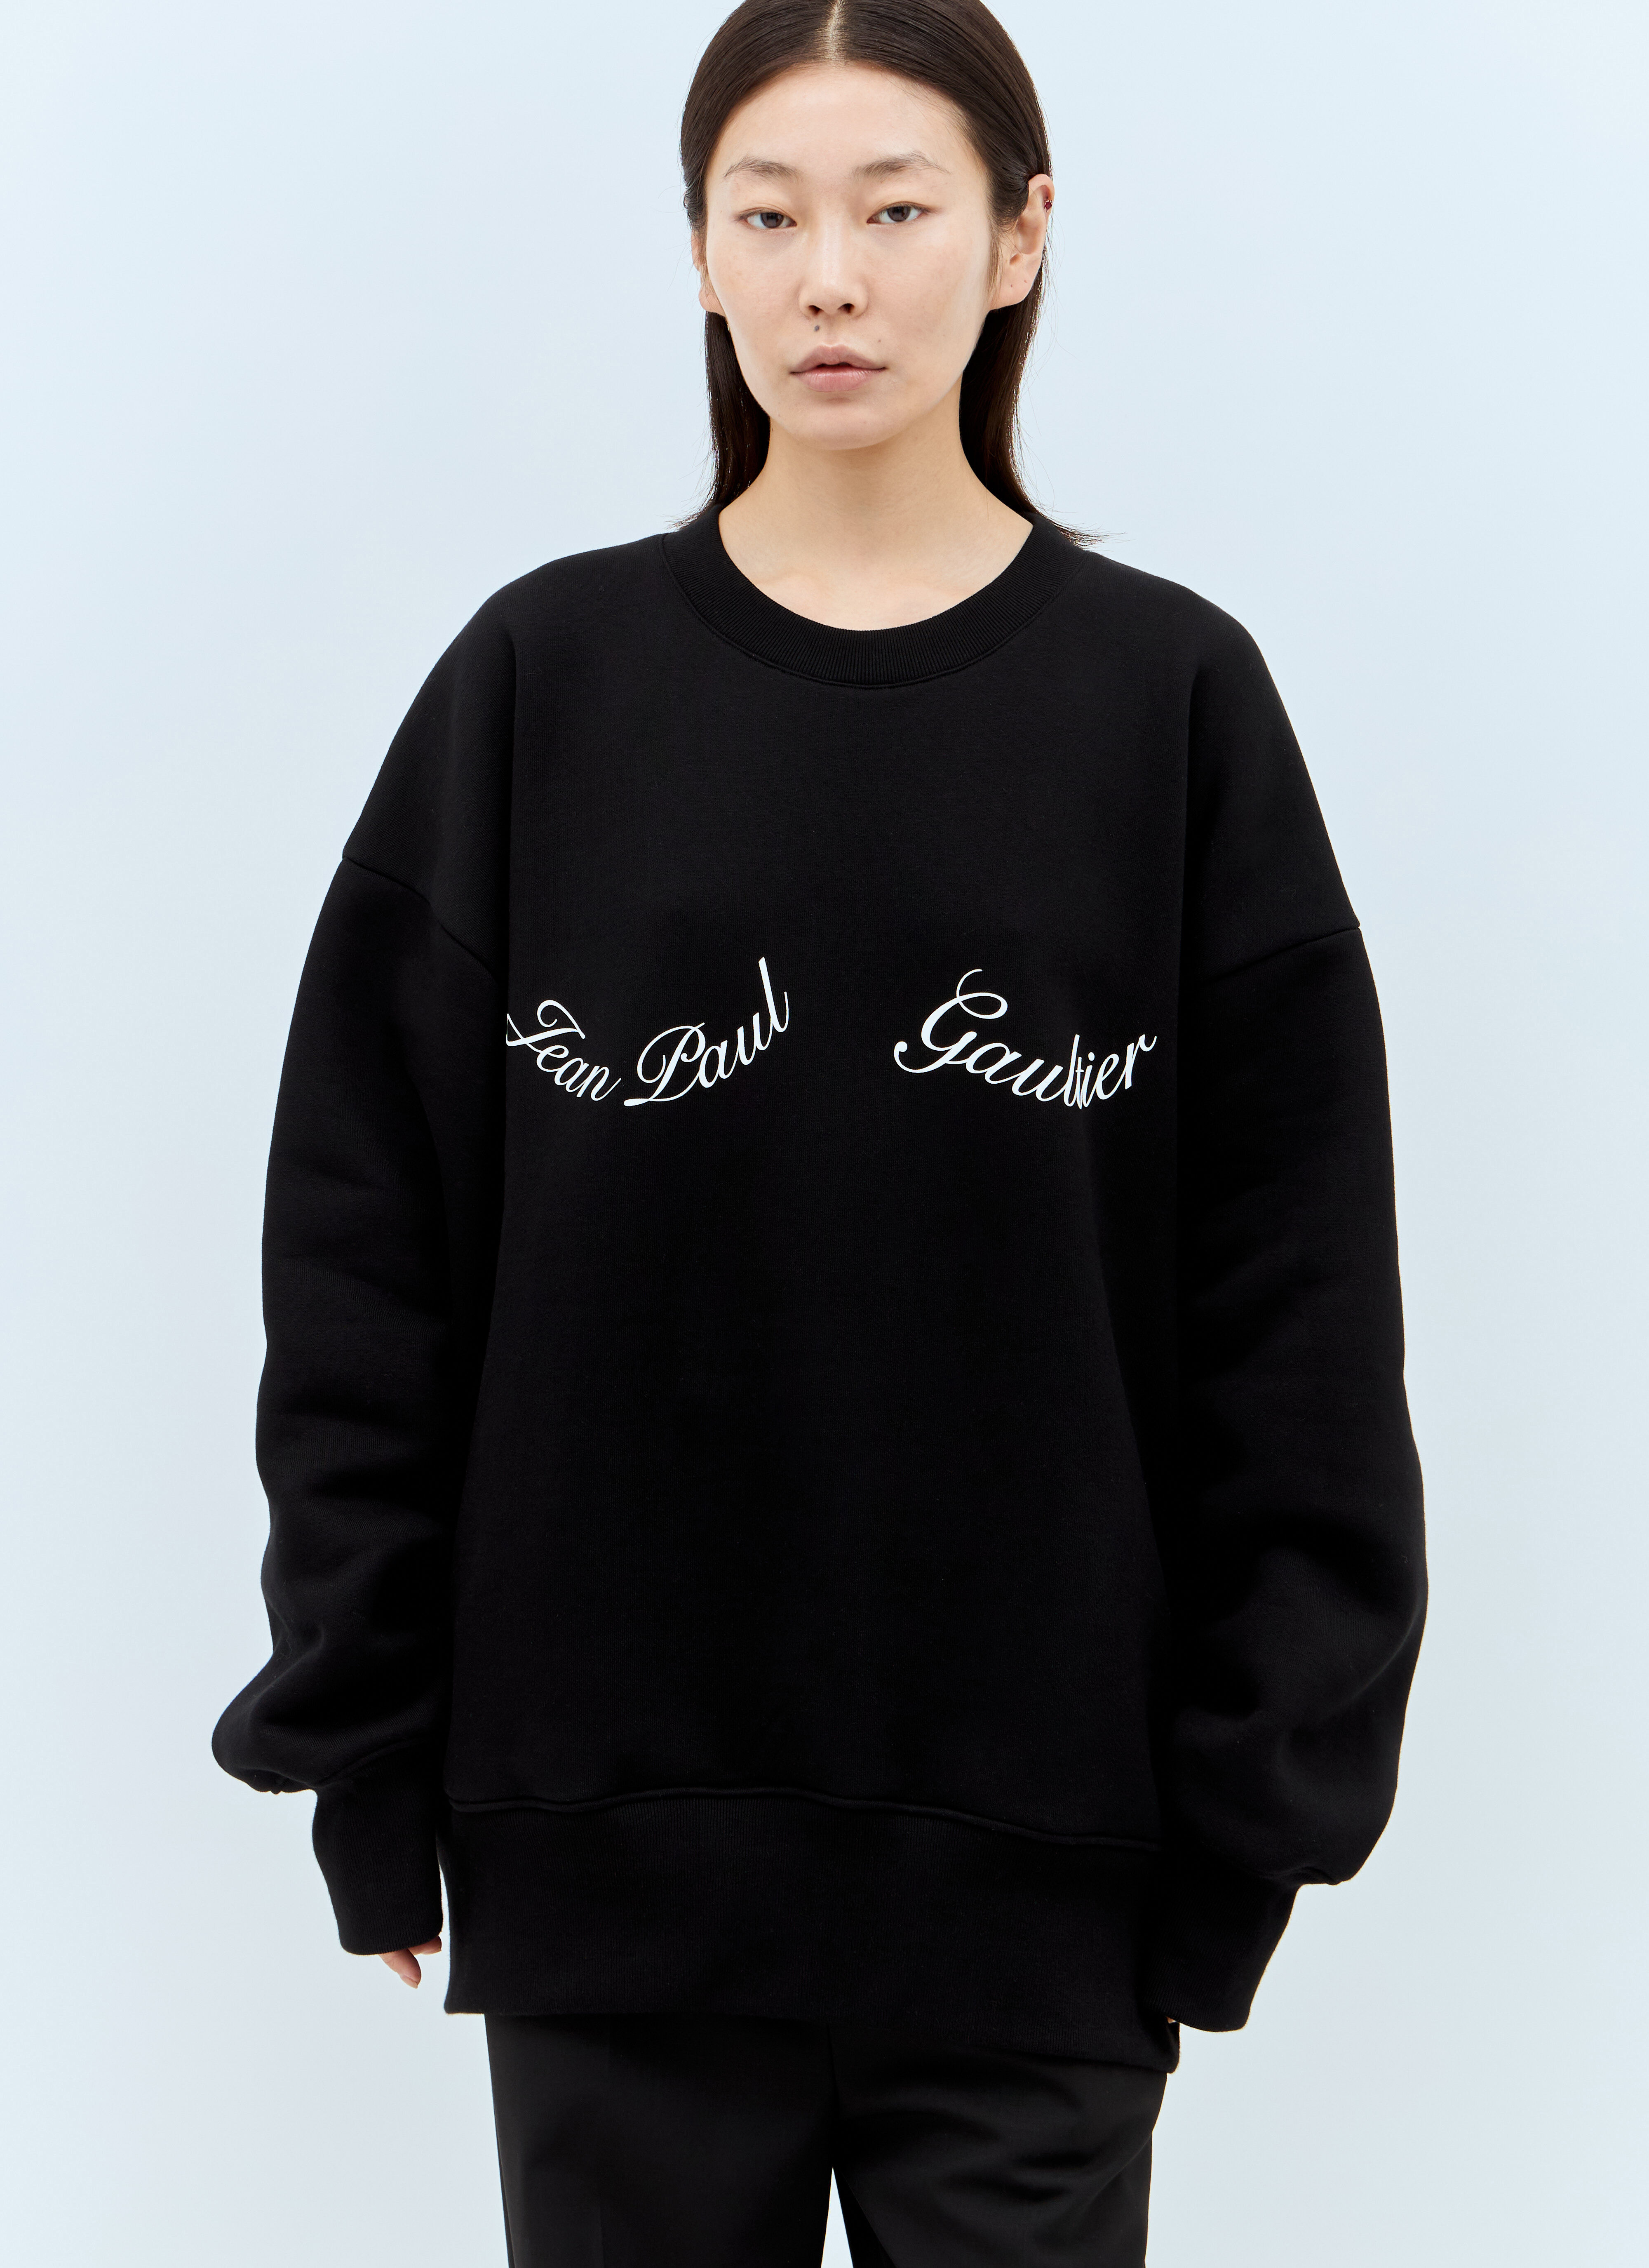 Jean Paul Gaultier Logo Print Sweatshirt Black jpg0258007